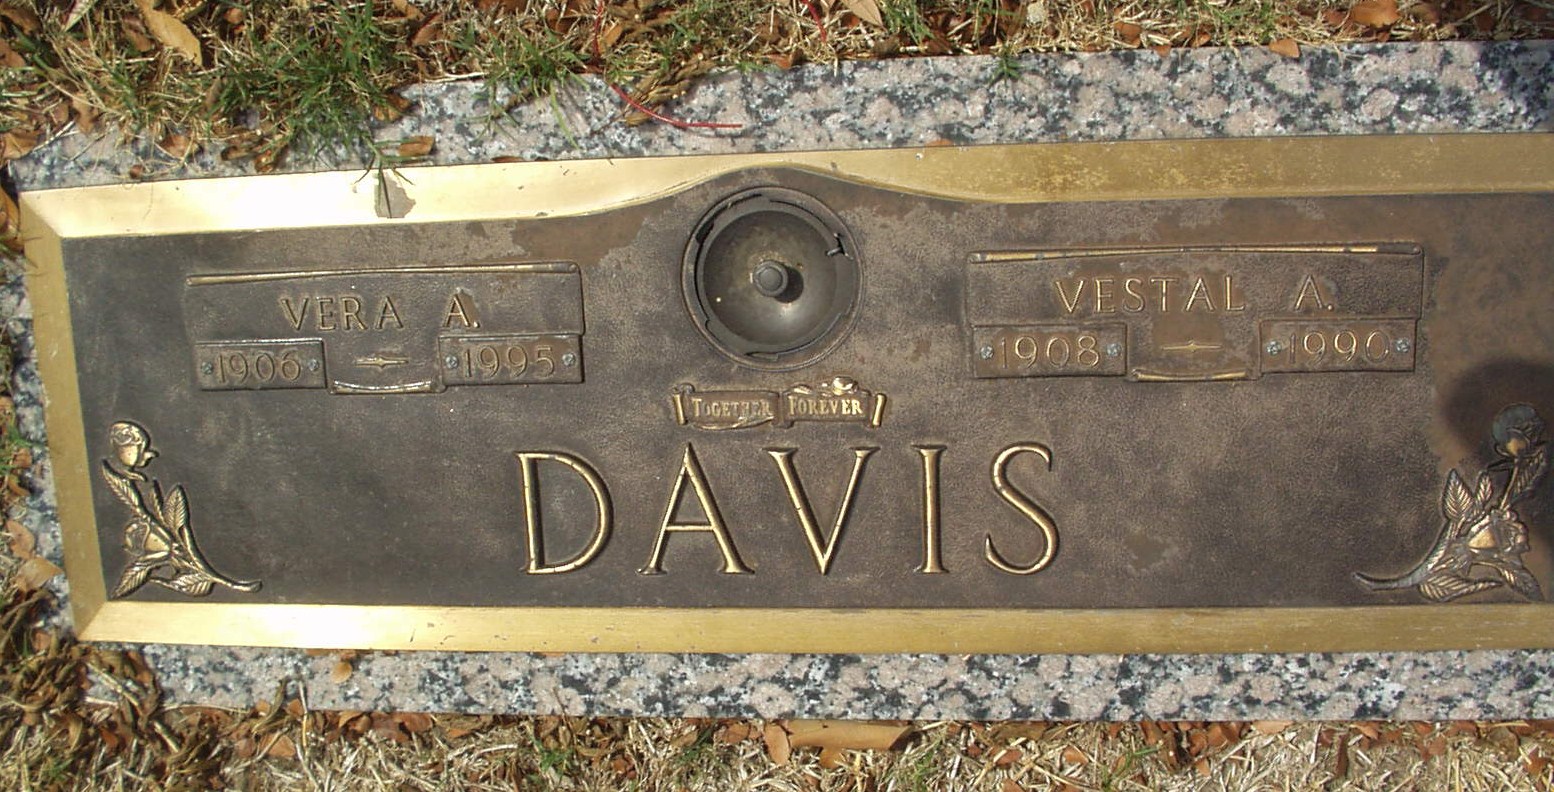 Vestal & Vera Davis stone